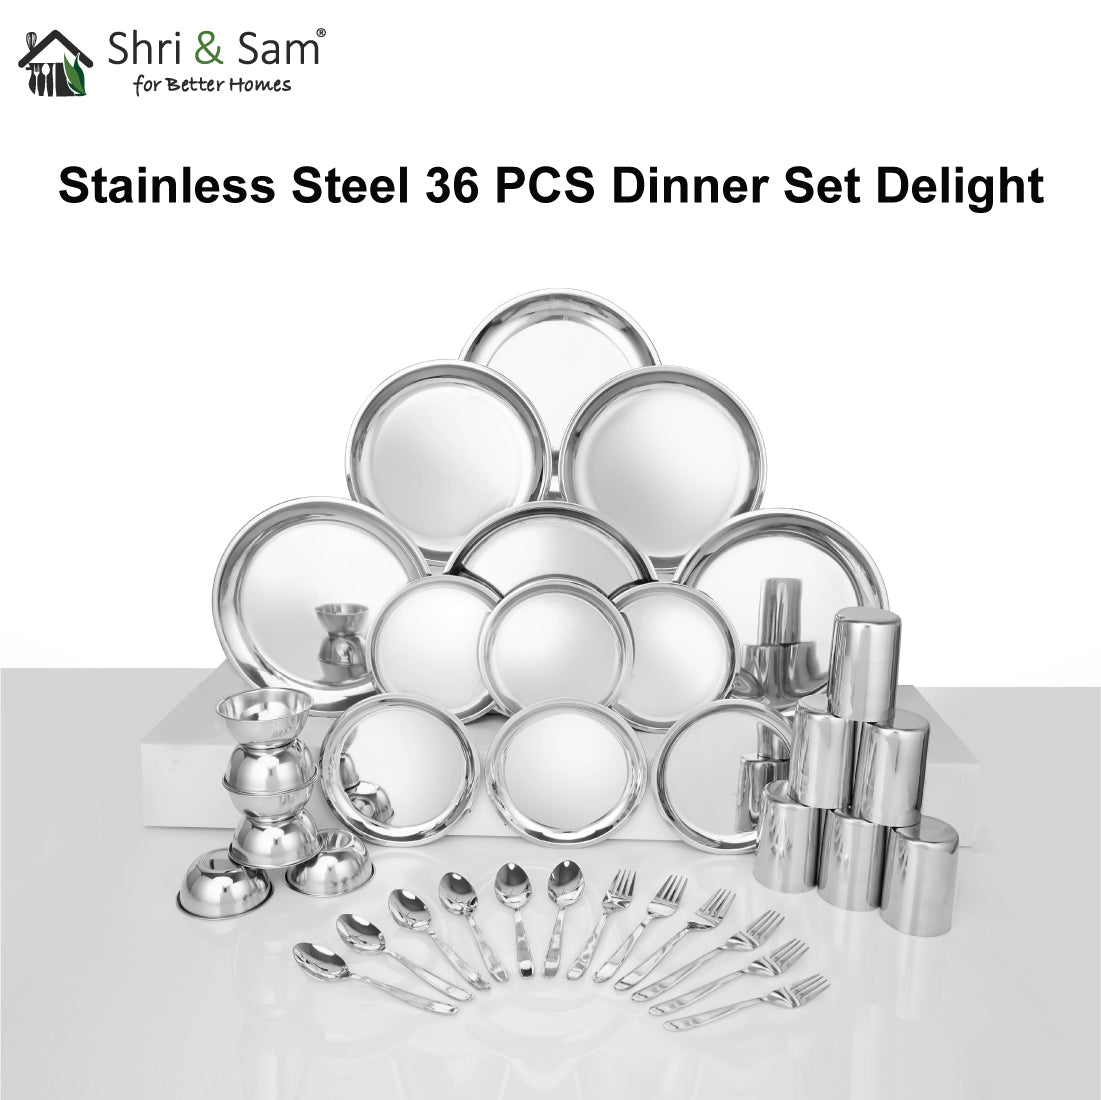 Stainless Steel 36 PCS Dinner set (6 People) Delight